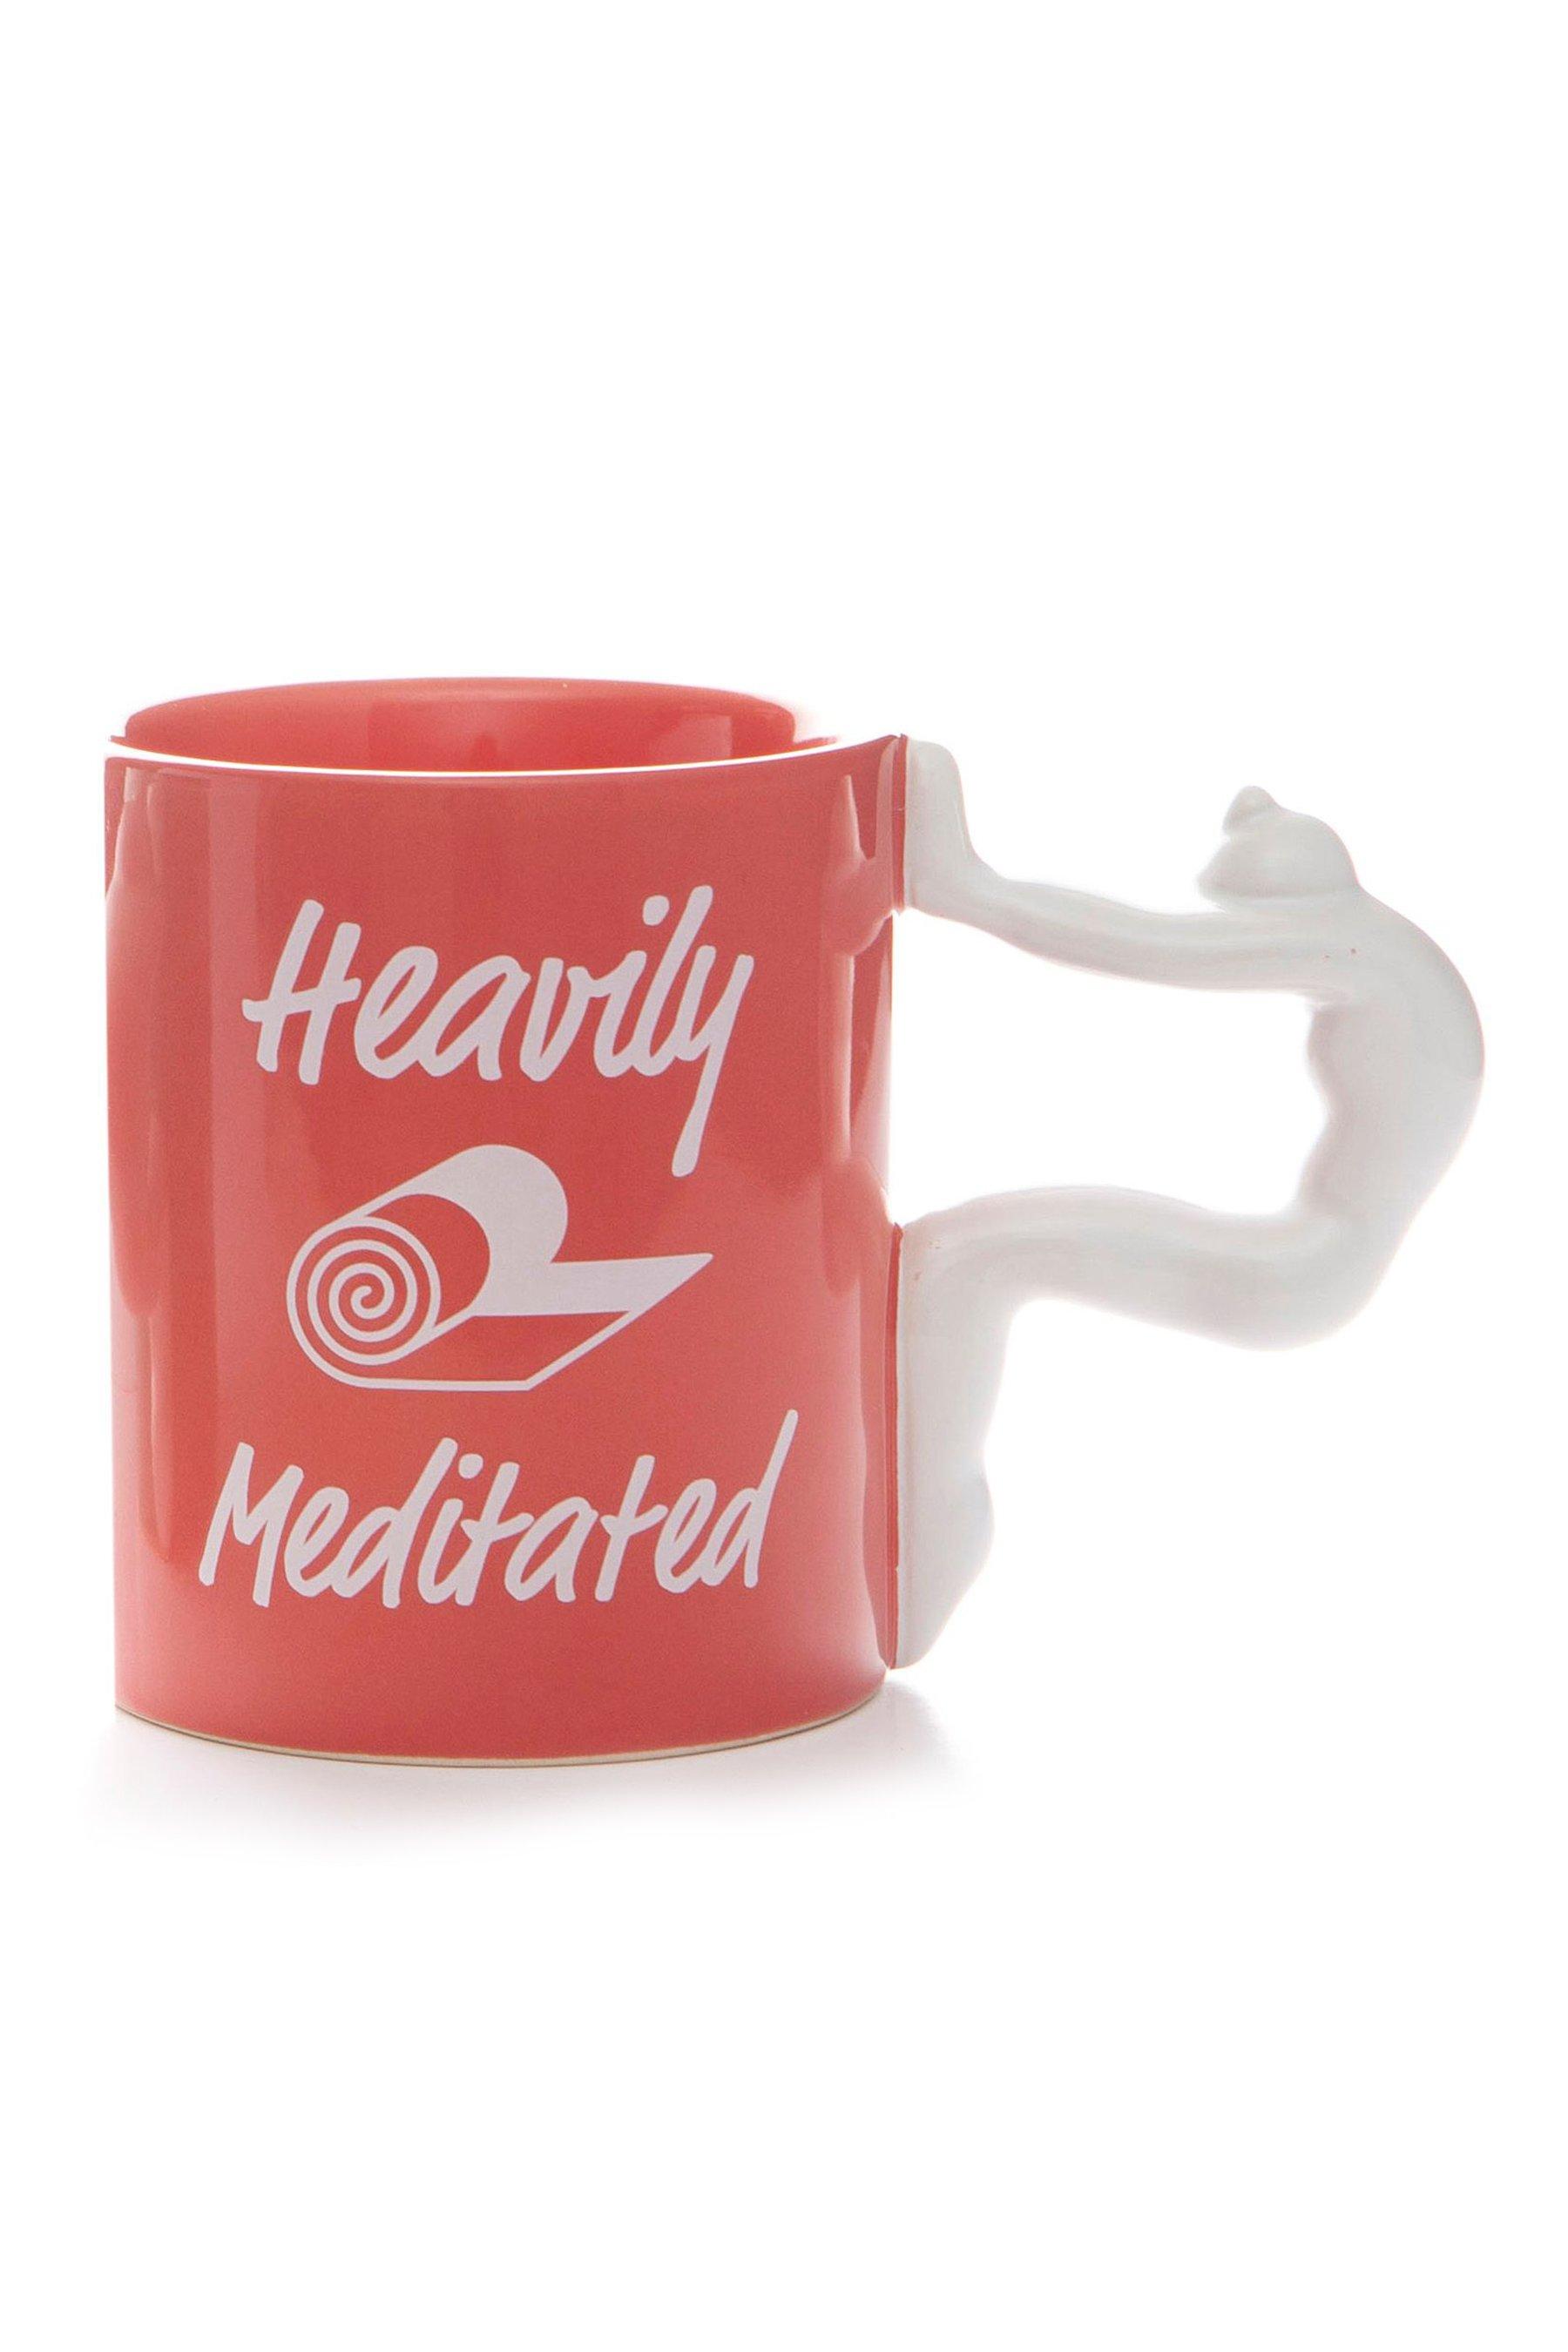 Yoga Mug - Heavily Meditated - Pink - Ceramic